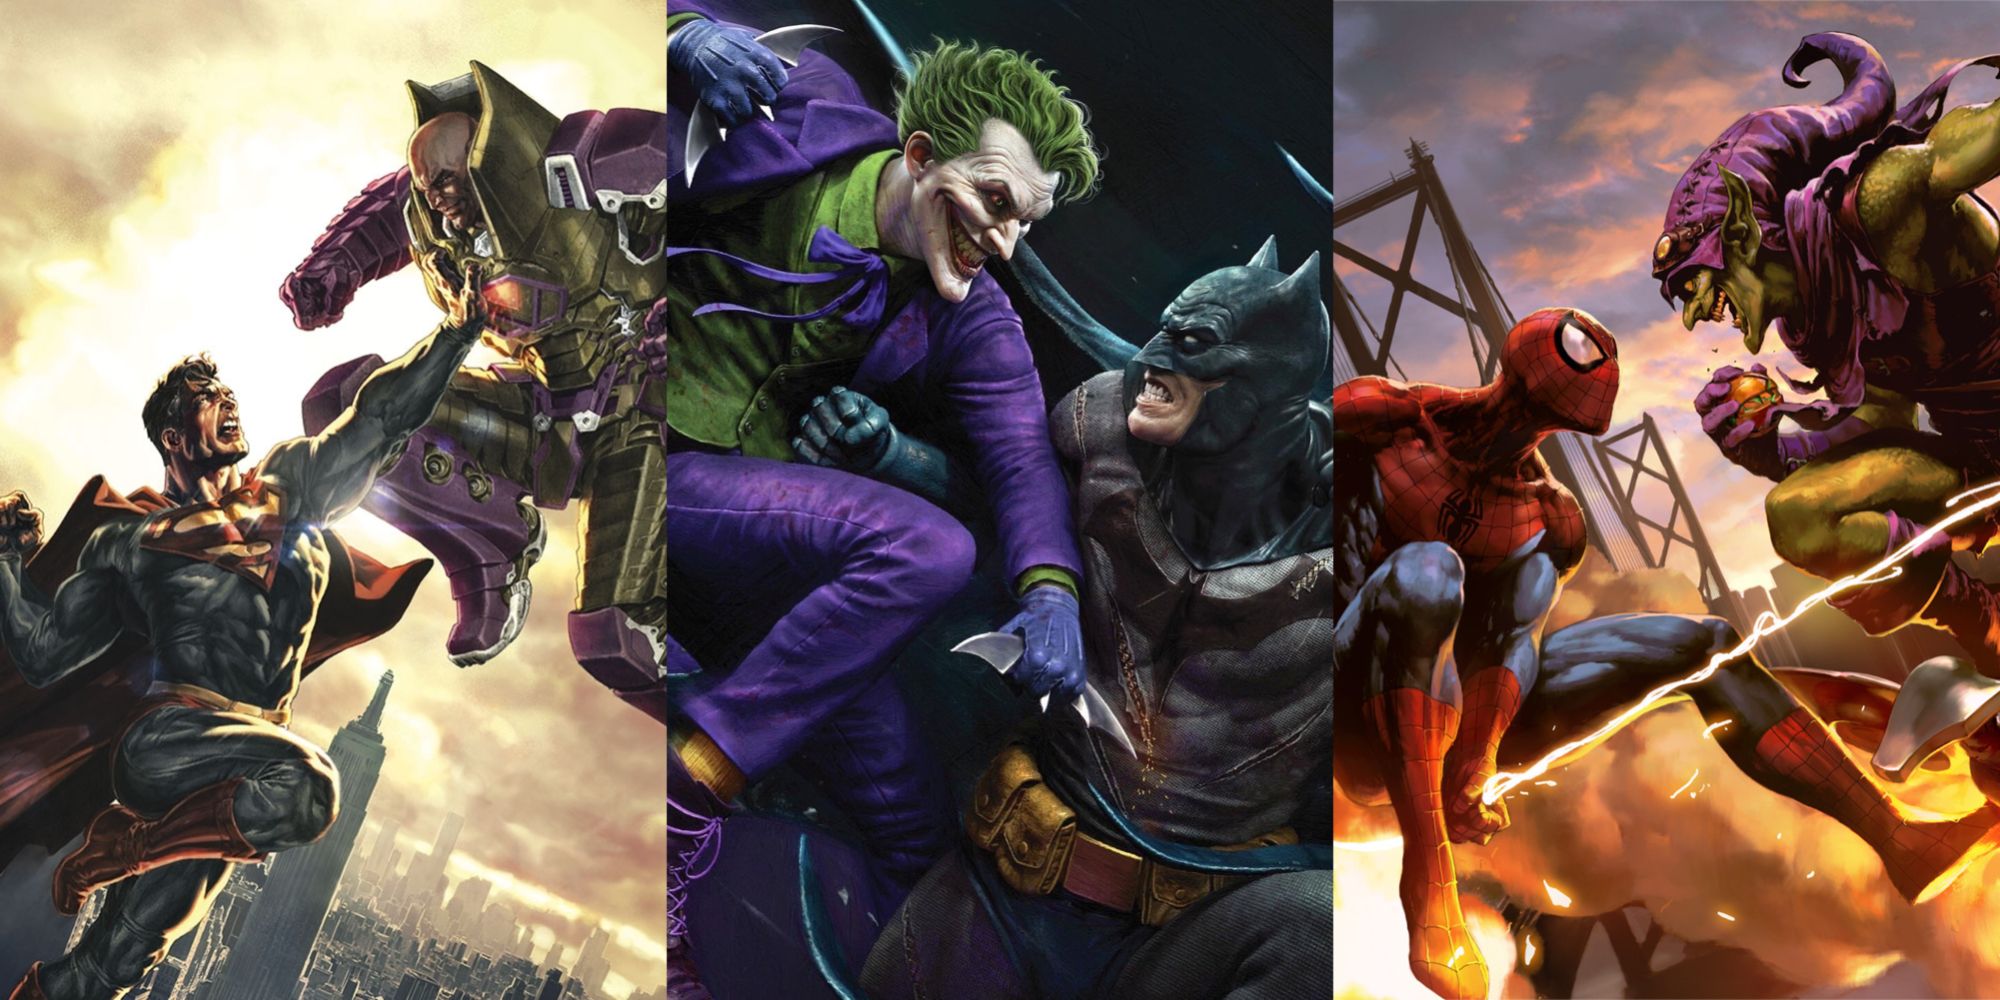 Superman and Lex Luthor, Batman and Joker, Spider-Man and Green Goblin